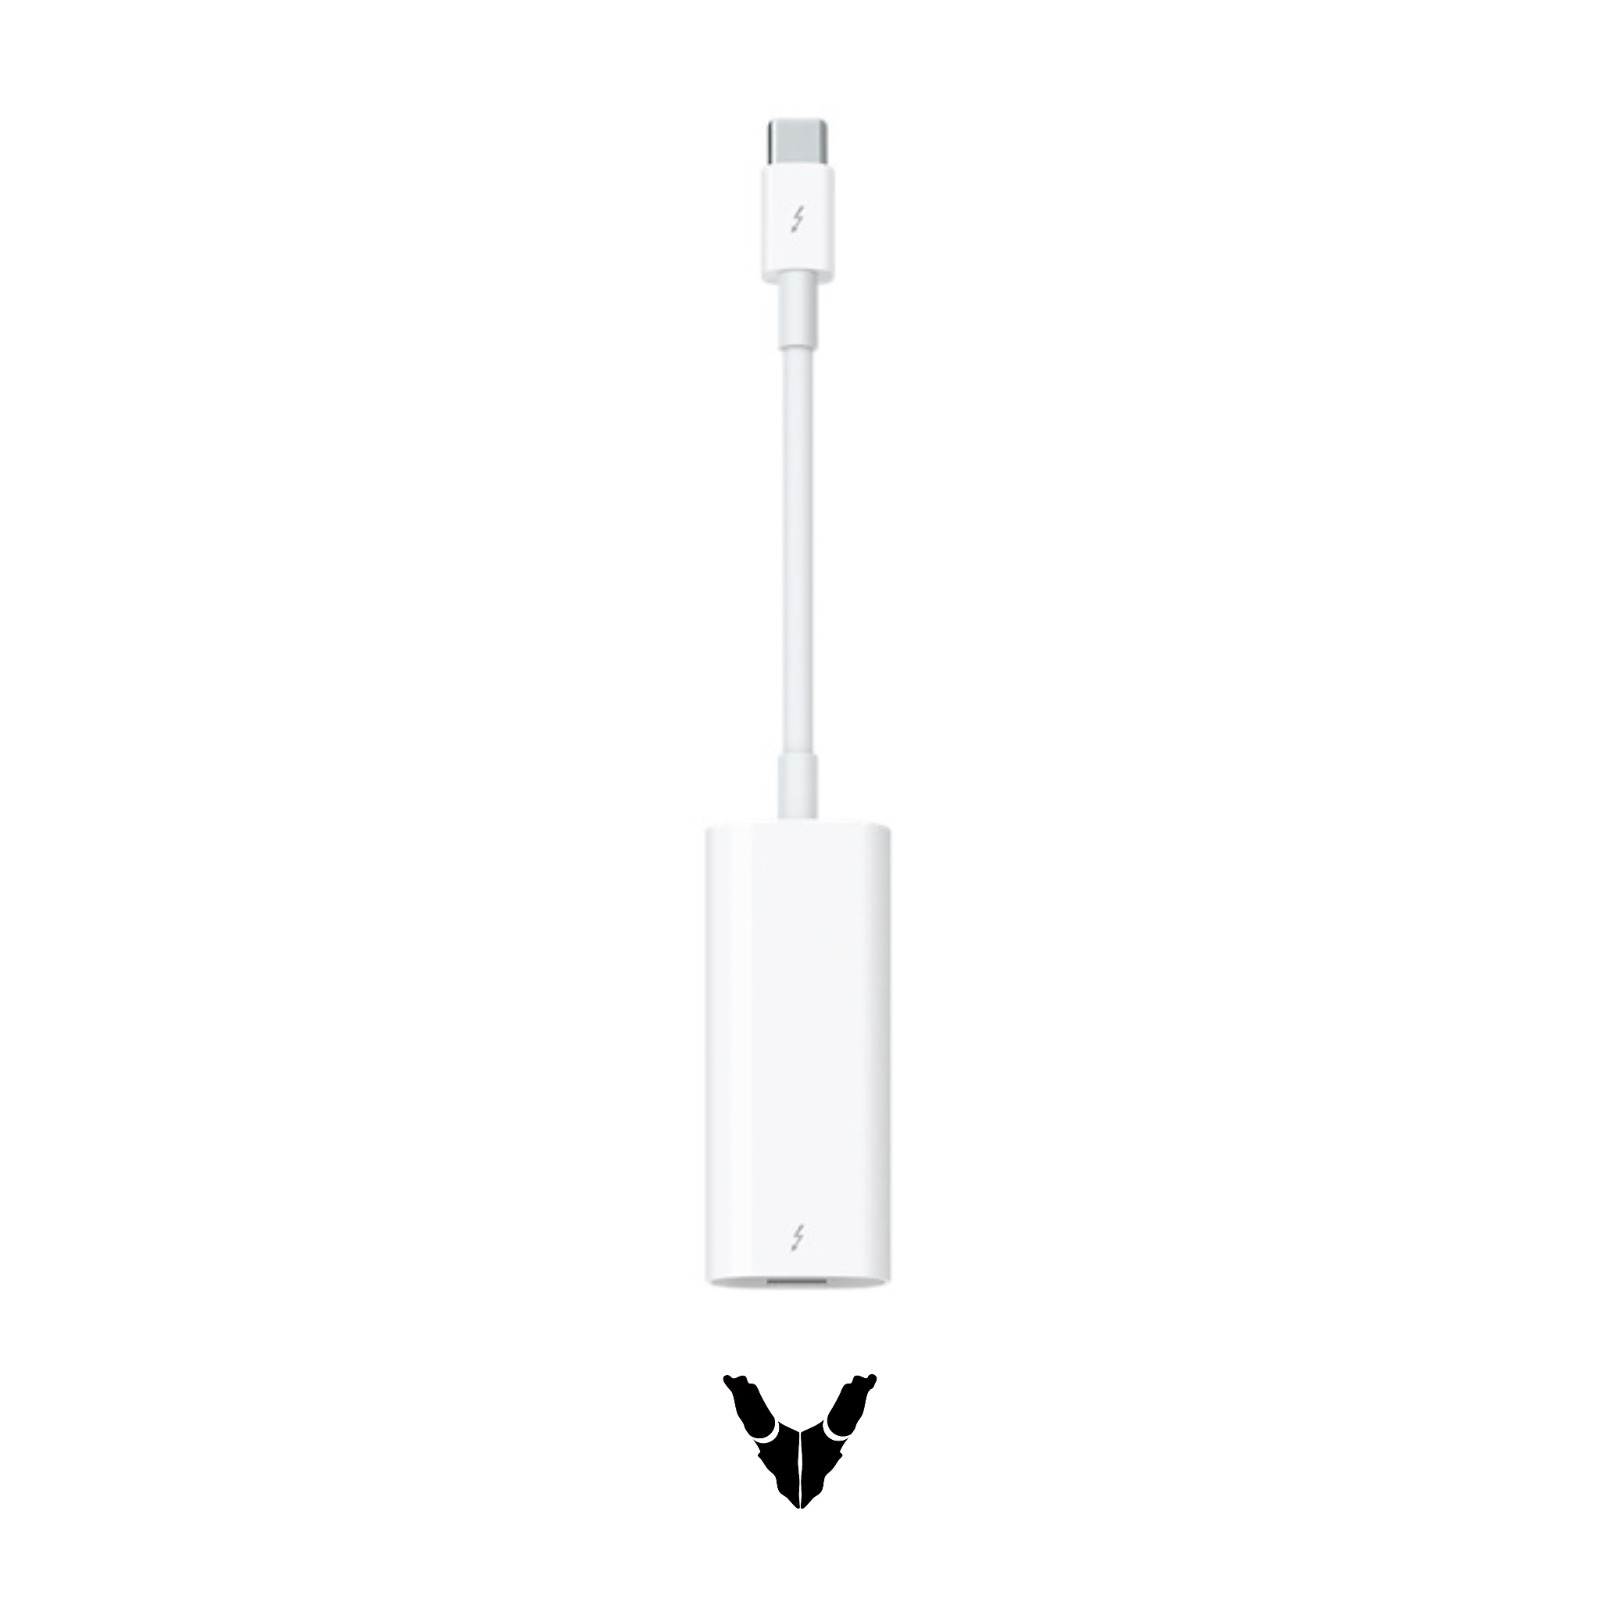 Apple - Thunderbolt 3 (USB-C) to Thunderbolt 2 Adapter - A1790 - MMEL2AM/A